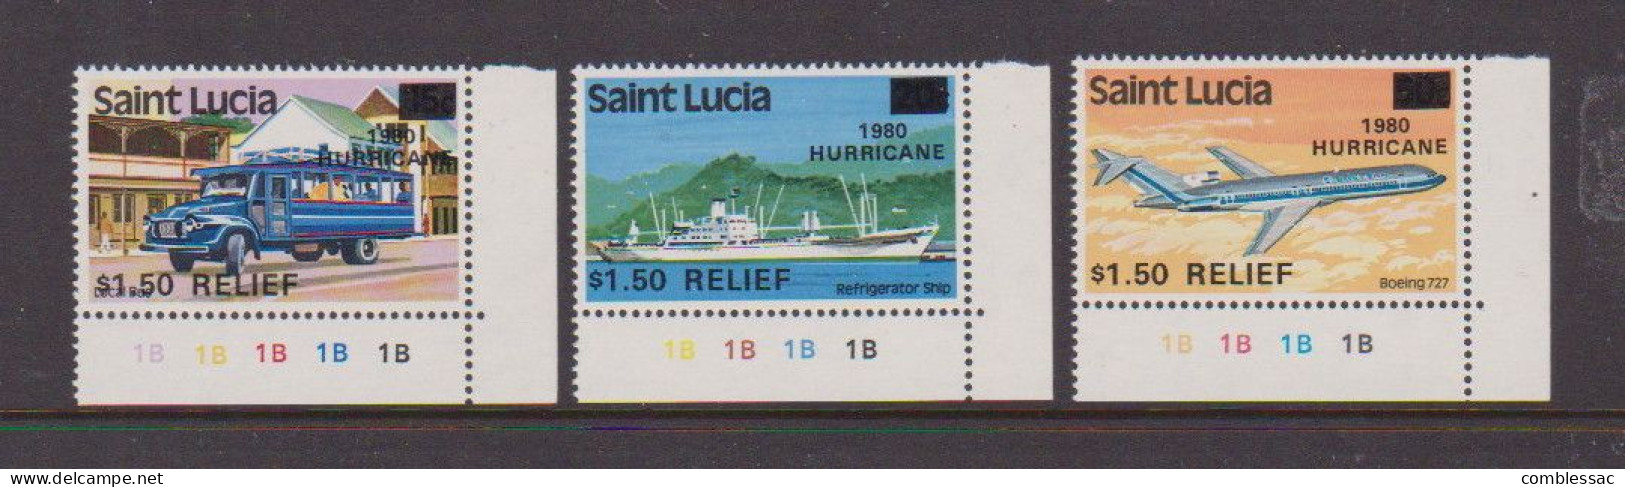 SAINT LUCIA    1980   Hurricane  Relief    Set  Of  3     MNH - St.Lucia (1979-...)